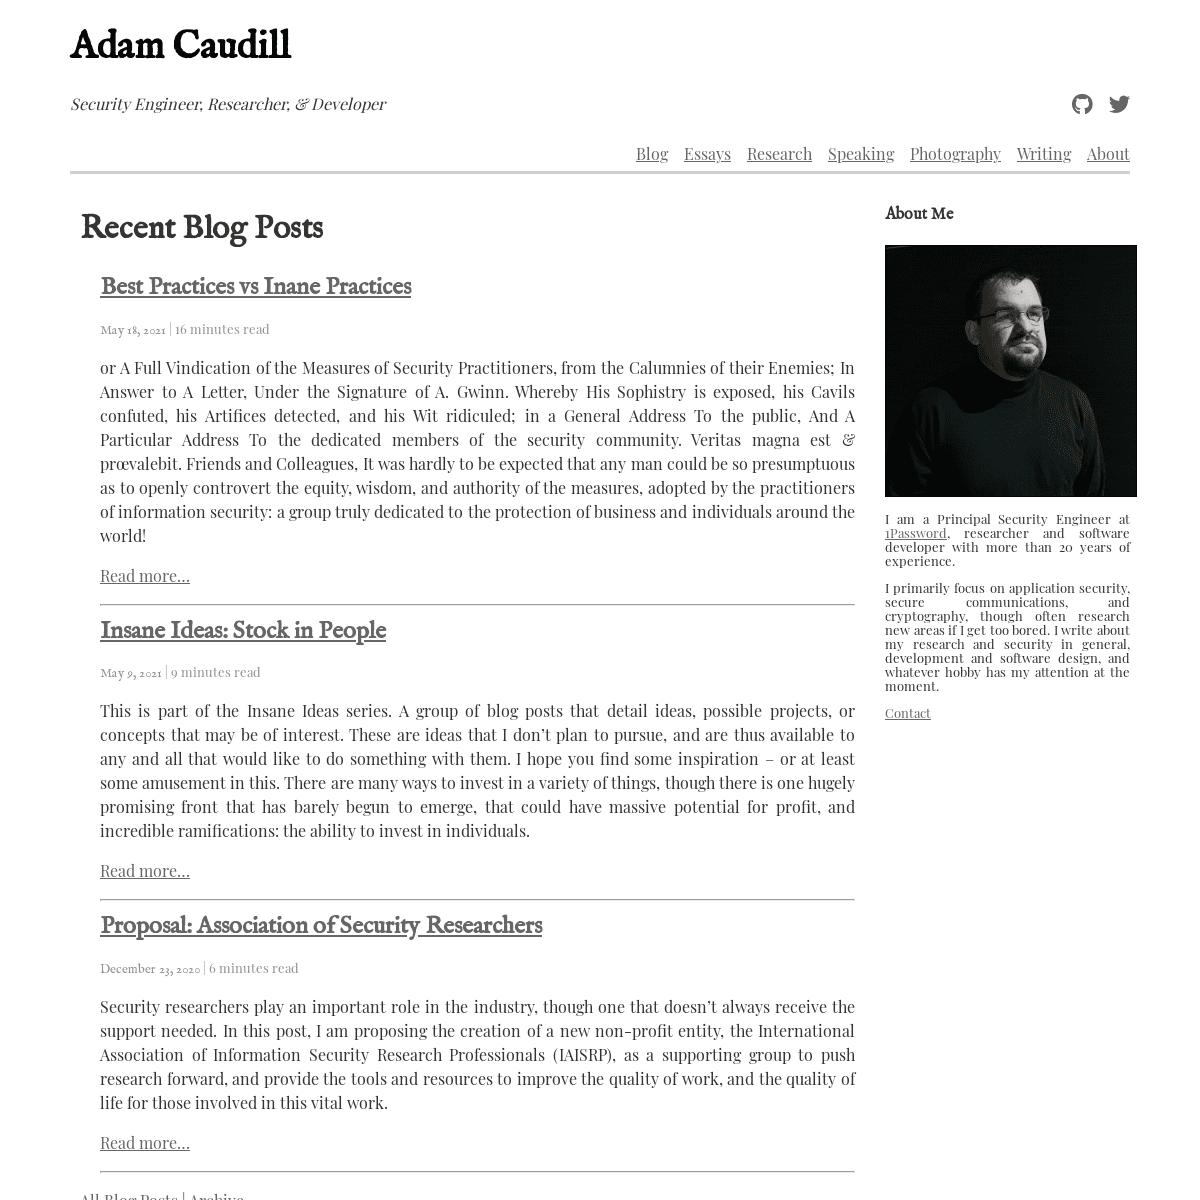 A complete backup of https://adamcaudill.com